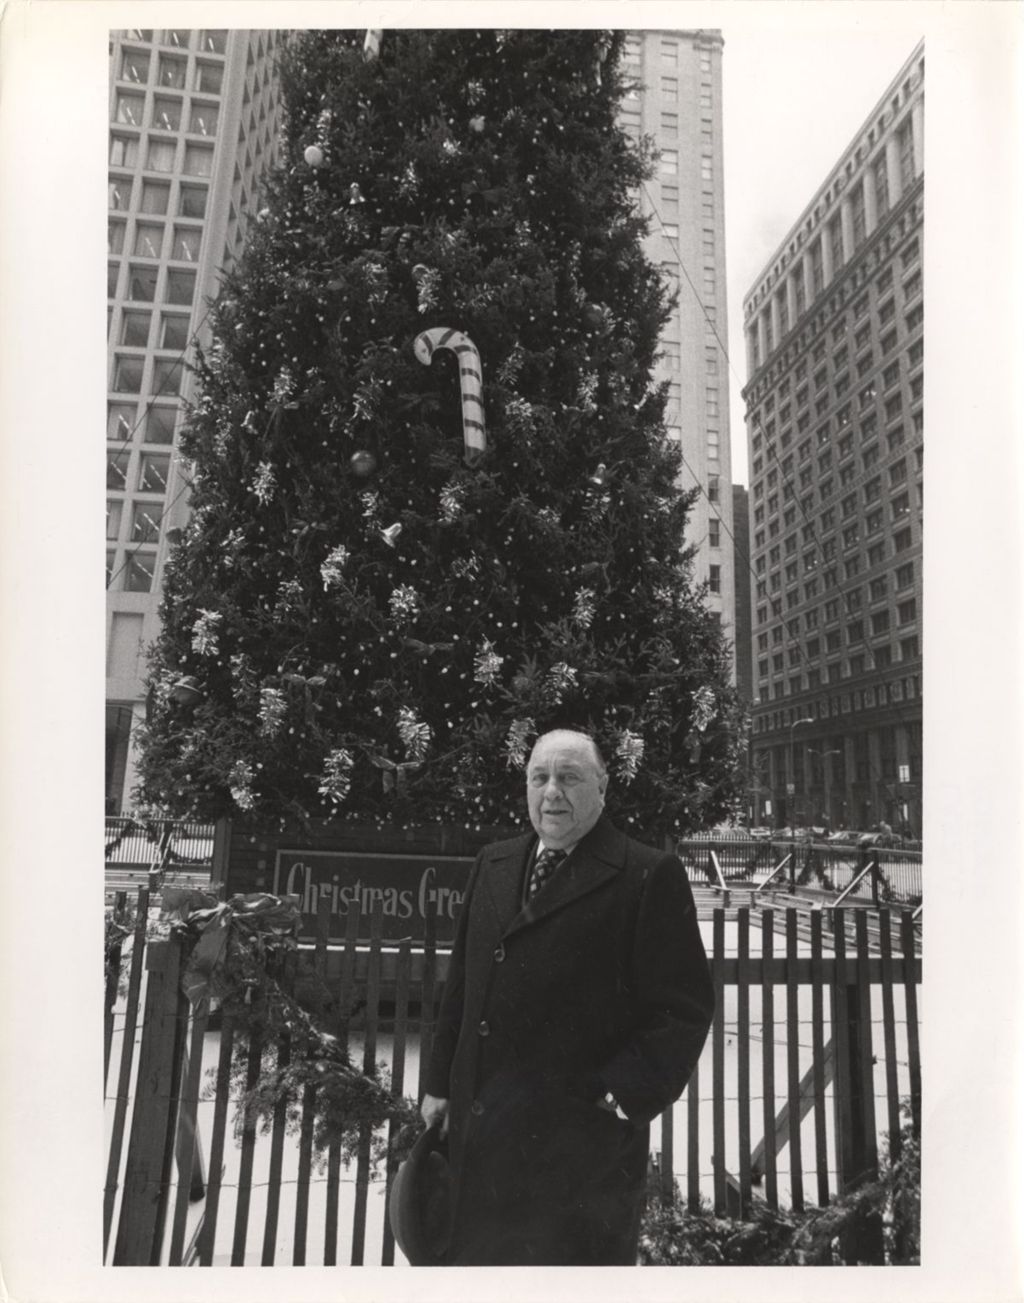 Miniature of Richard J. Daley with Christmas tree, Civic Center Plaza